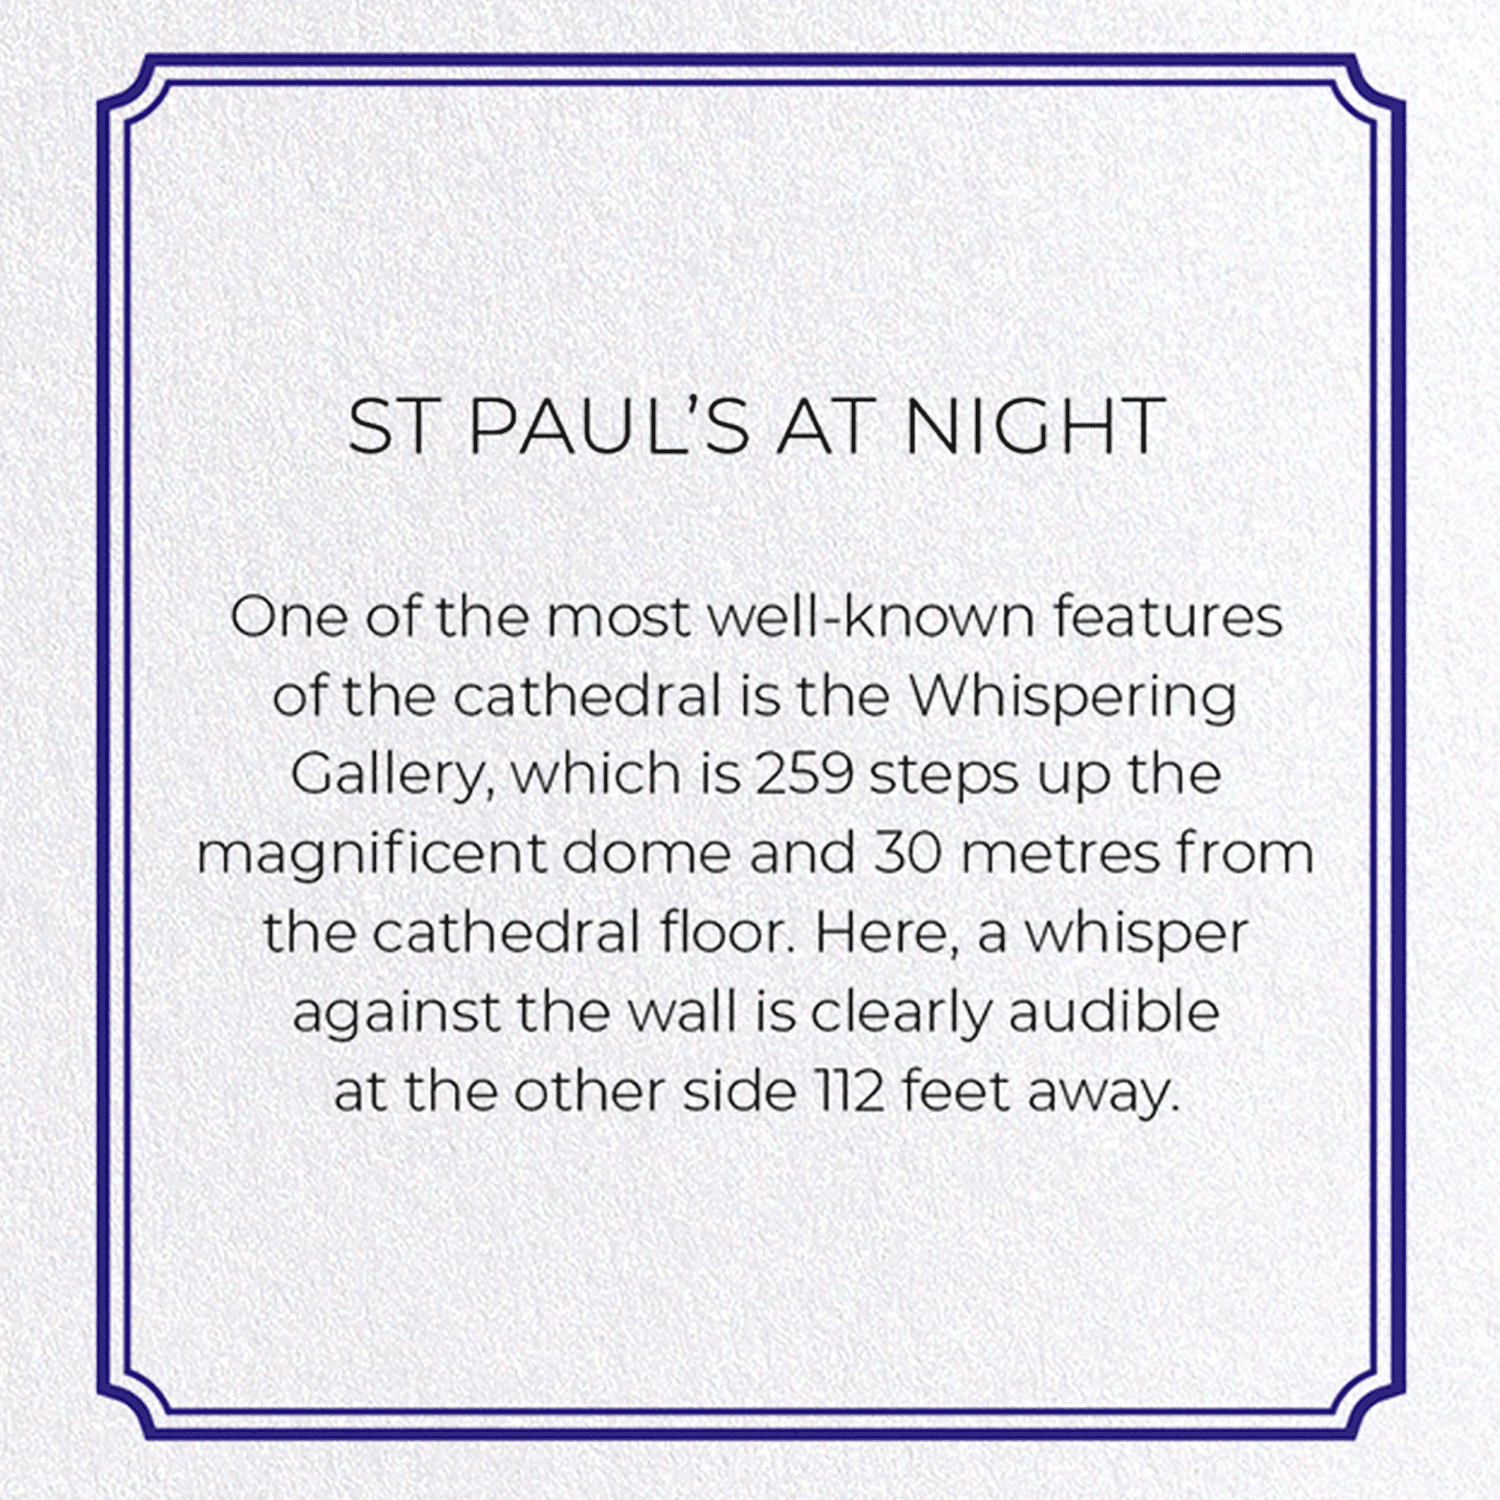 ST PAUL’S AT NIGHT